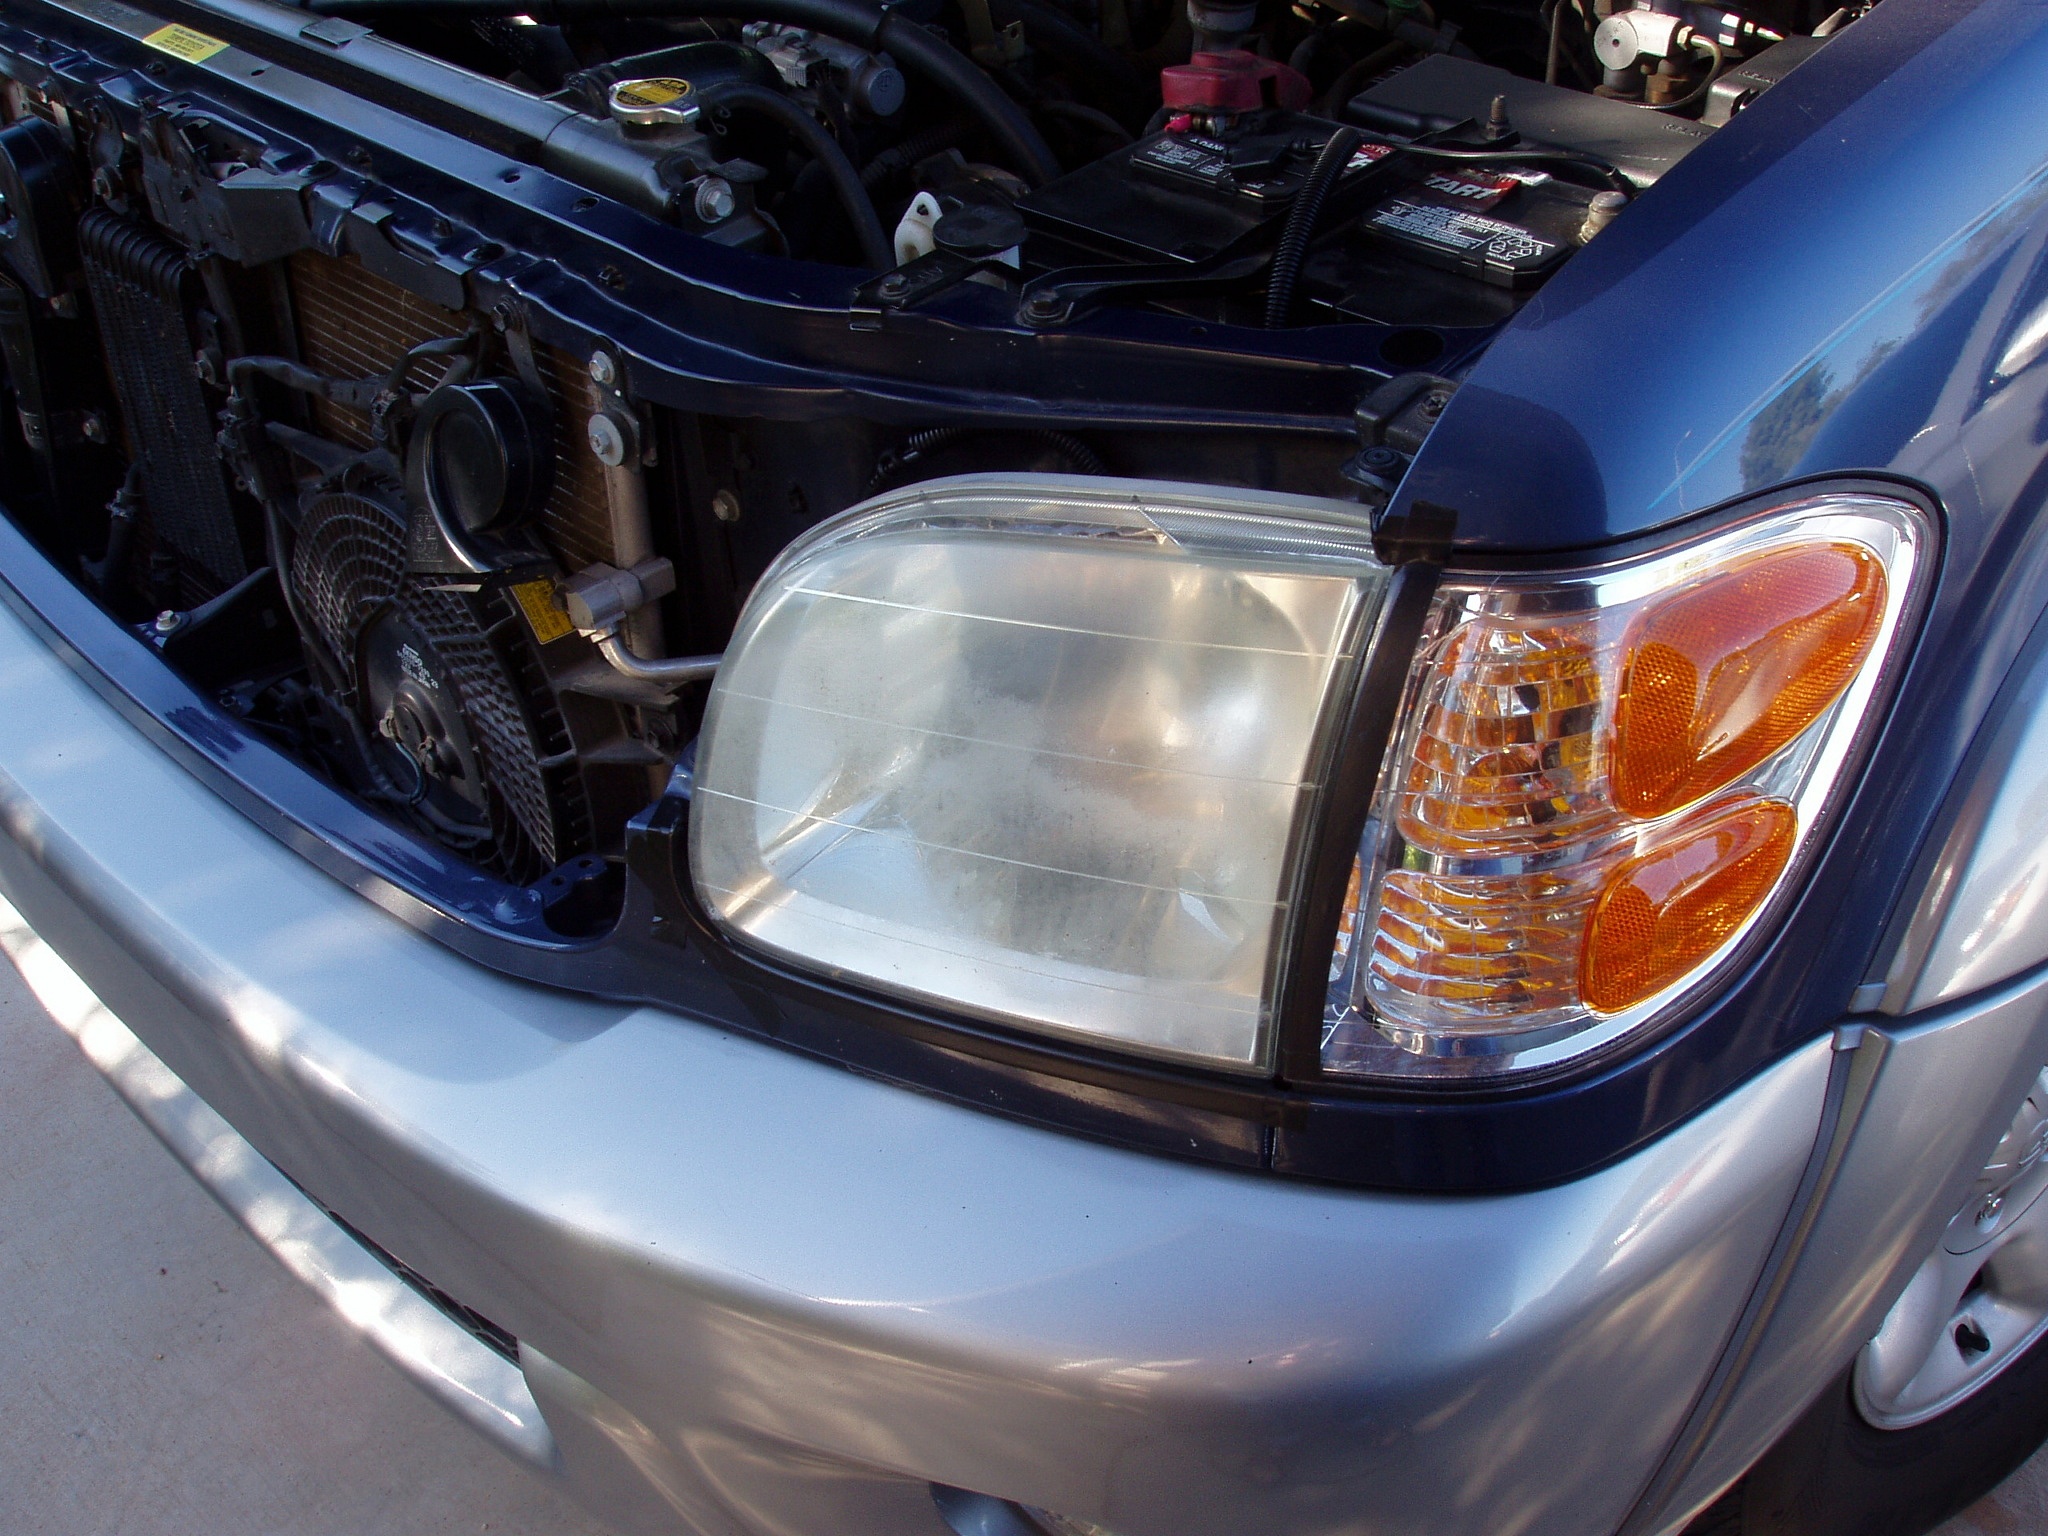 Do headlight restoration kits work?